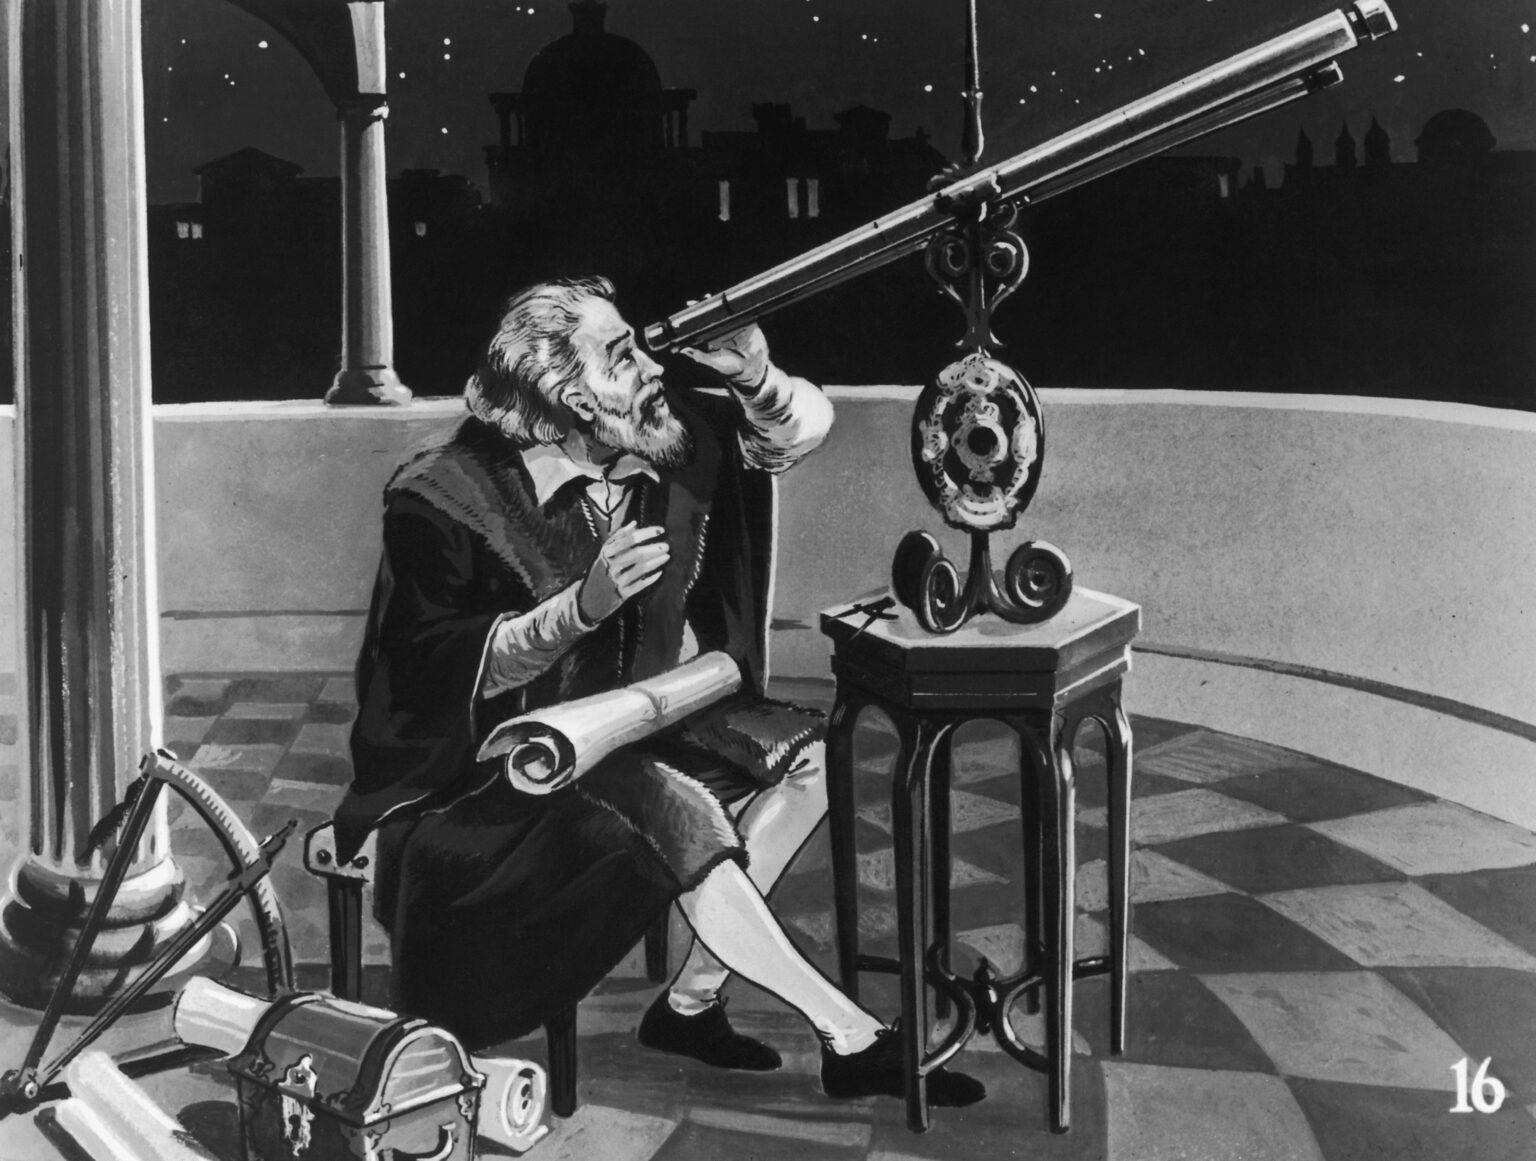 https://universemagazine.com/wp-content/uploads/2024/02/galileo-galilei-1564-1642-using-a-telescope-circa-1620-photo-by-hulton-archivegetty-images-scaled.jpg